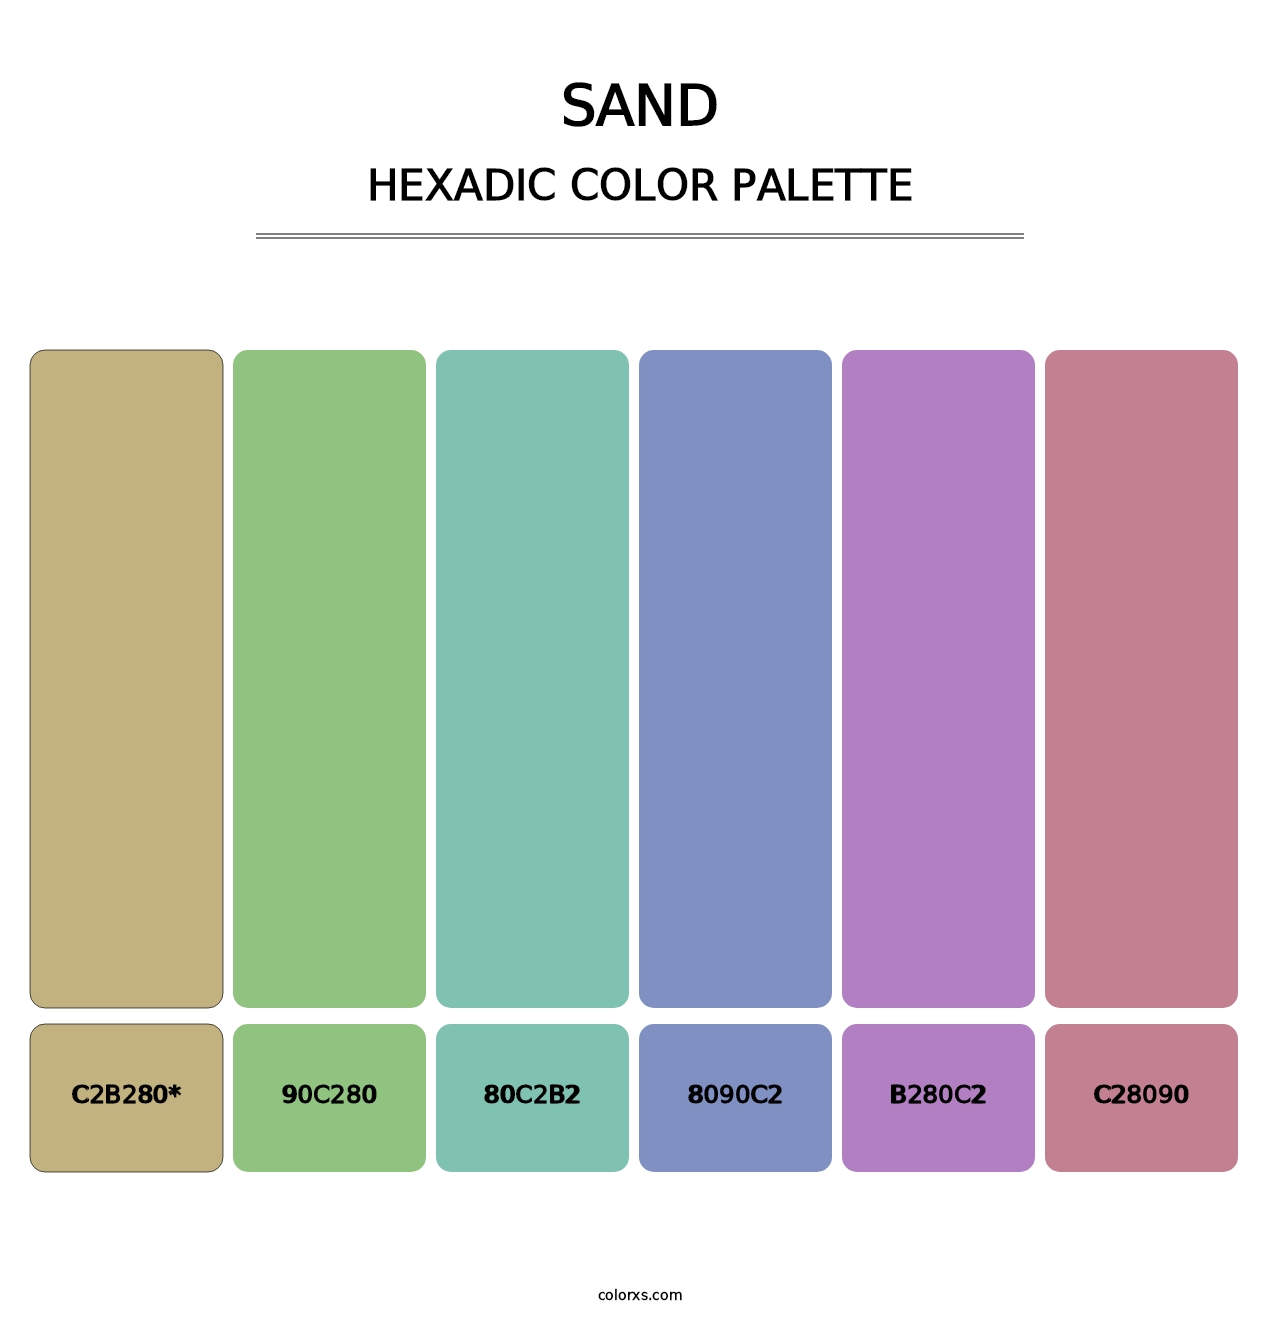 Sand - Hexadic Color Palette